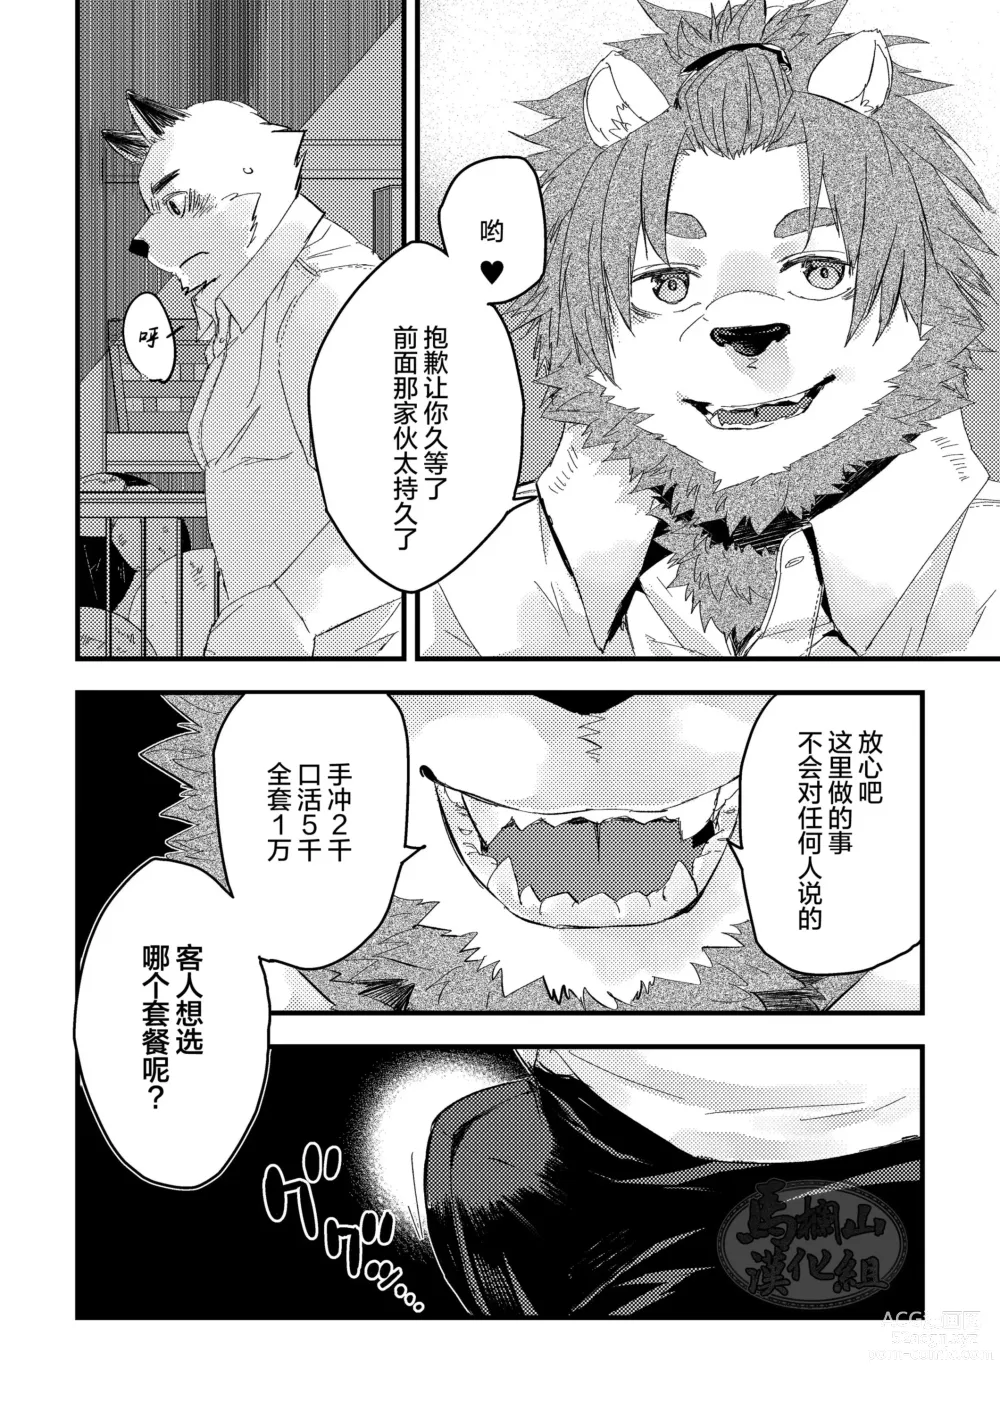 Page 3 of manga 獅子は兎を狩るのにも